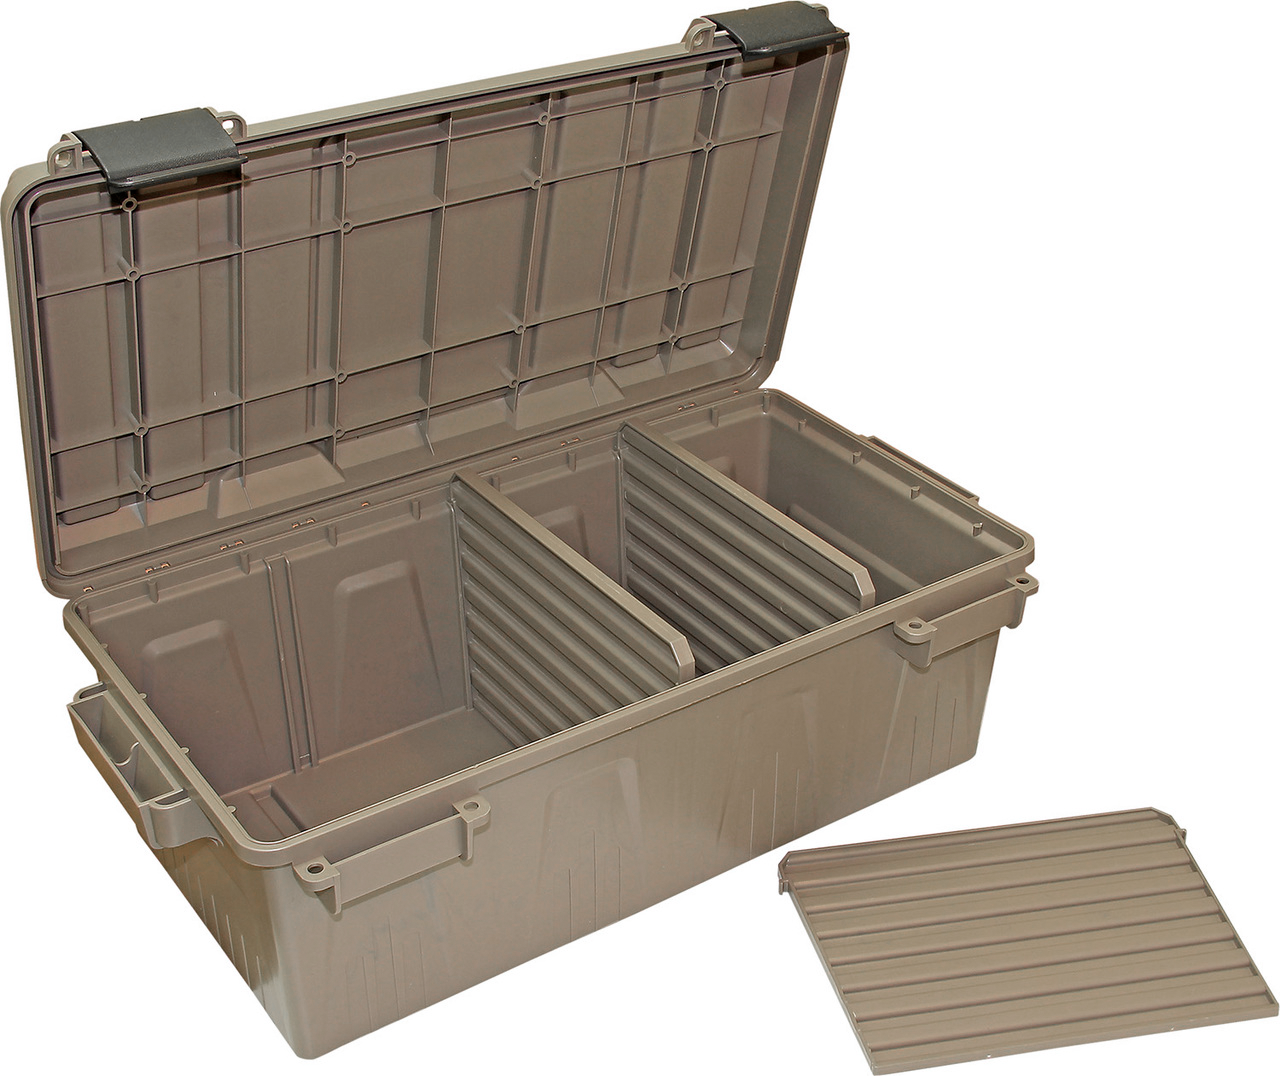  Large Military Ammo Box Watertight Camping Storage